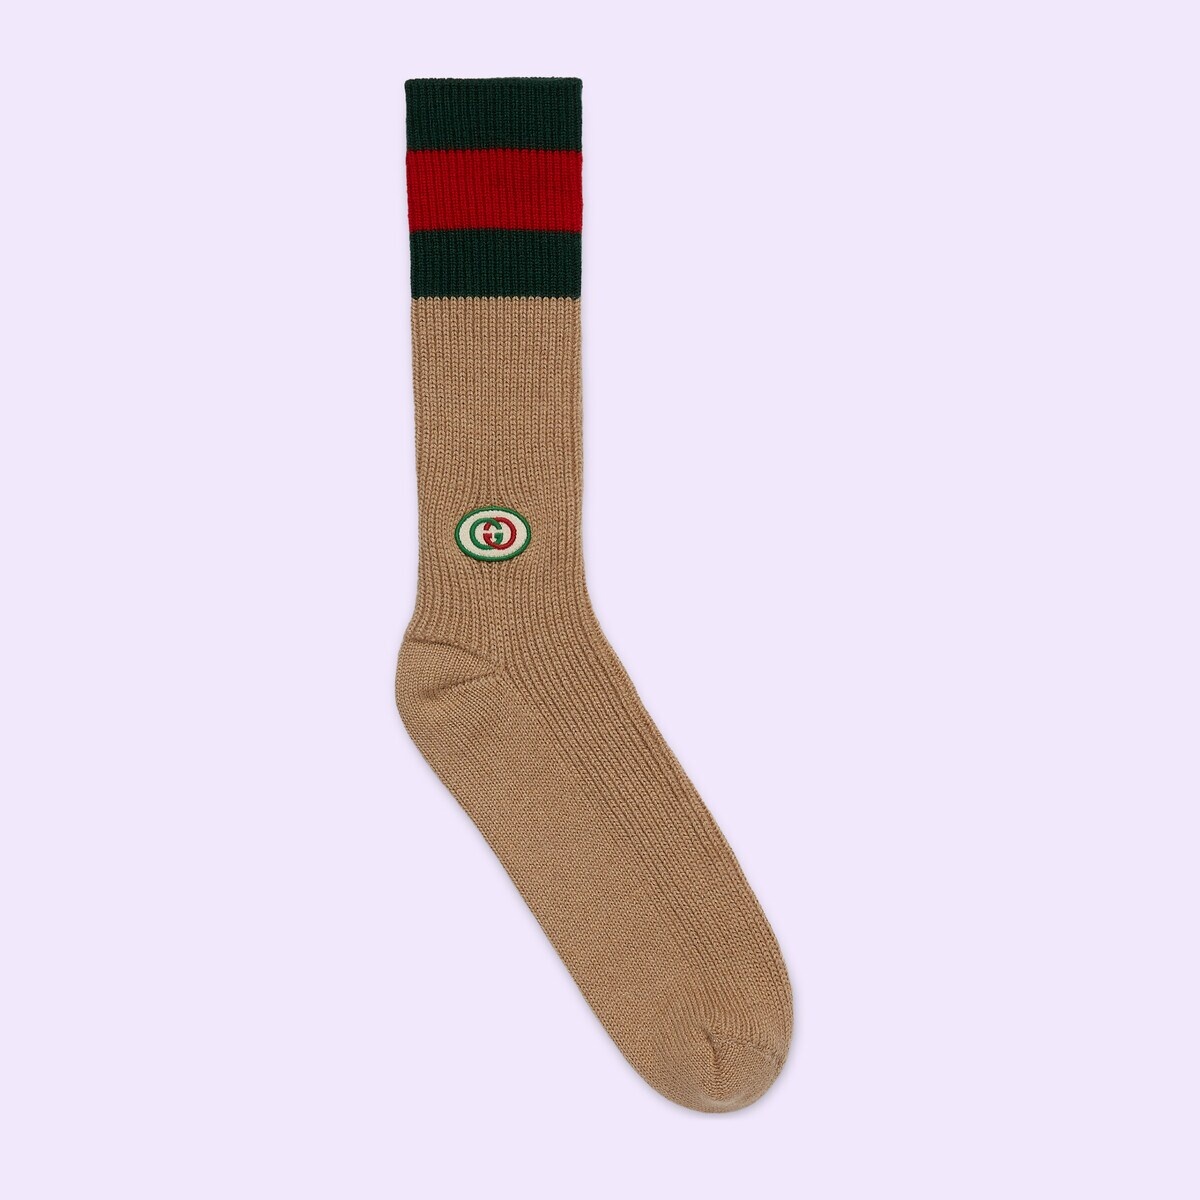 Wool socks with Interlocking G patch - 1